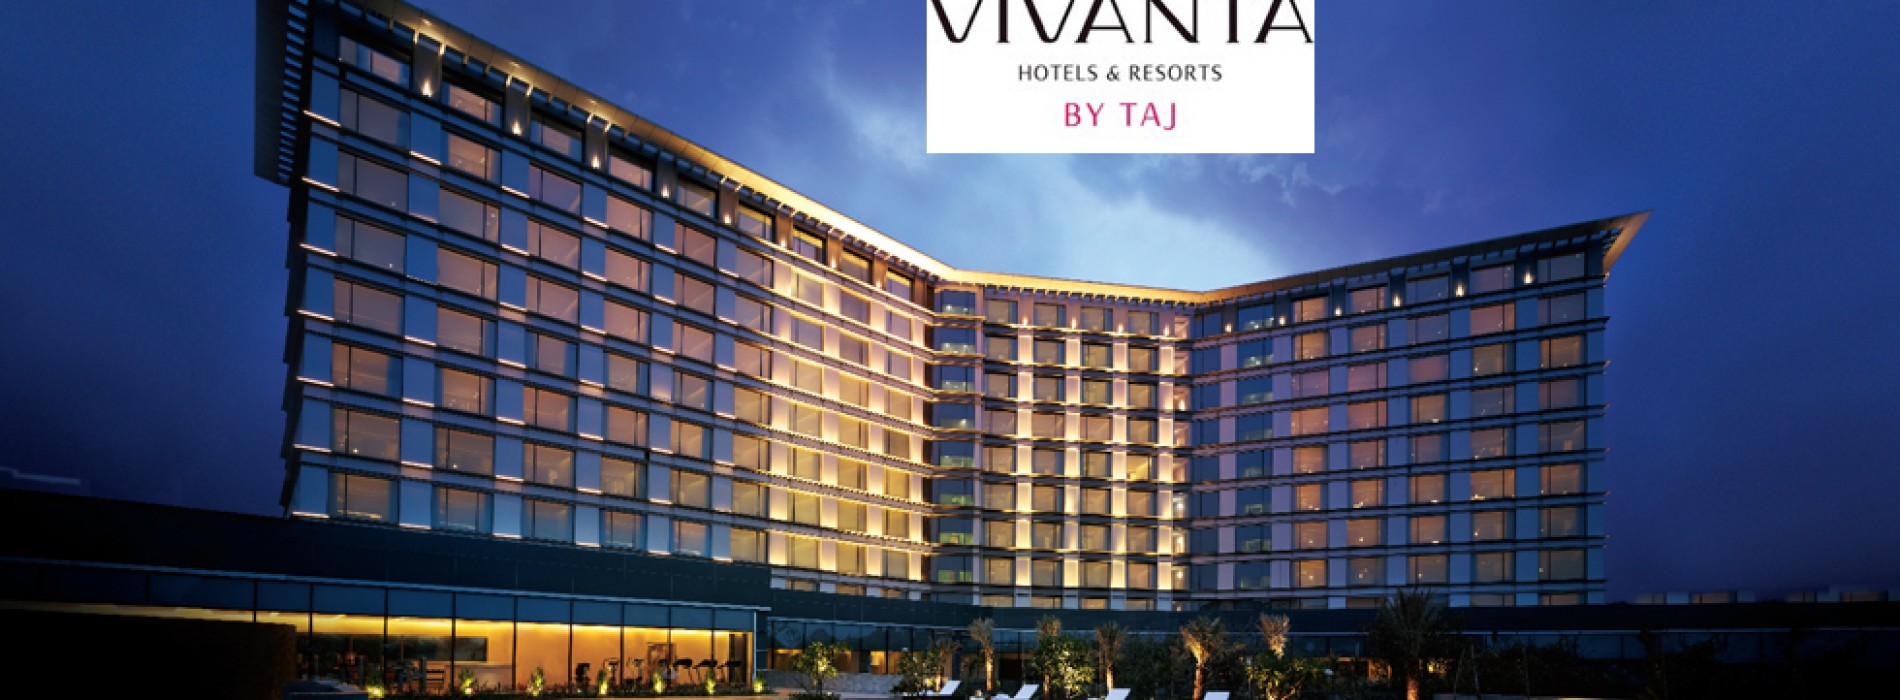 Indian Hotels to exit Vivanta and Gateway brands, bring hotels under Taj fold